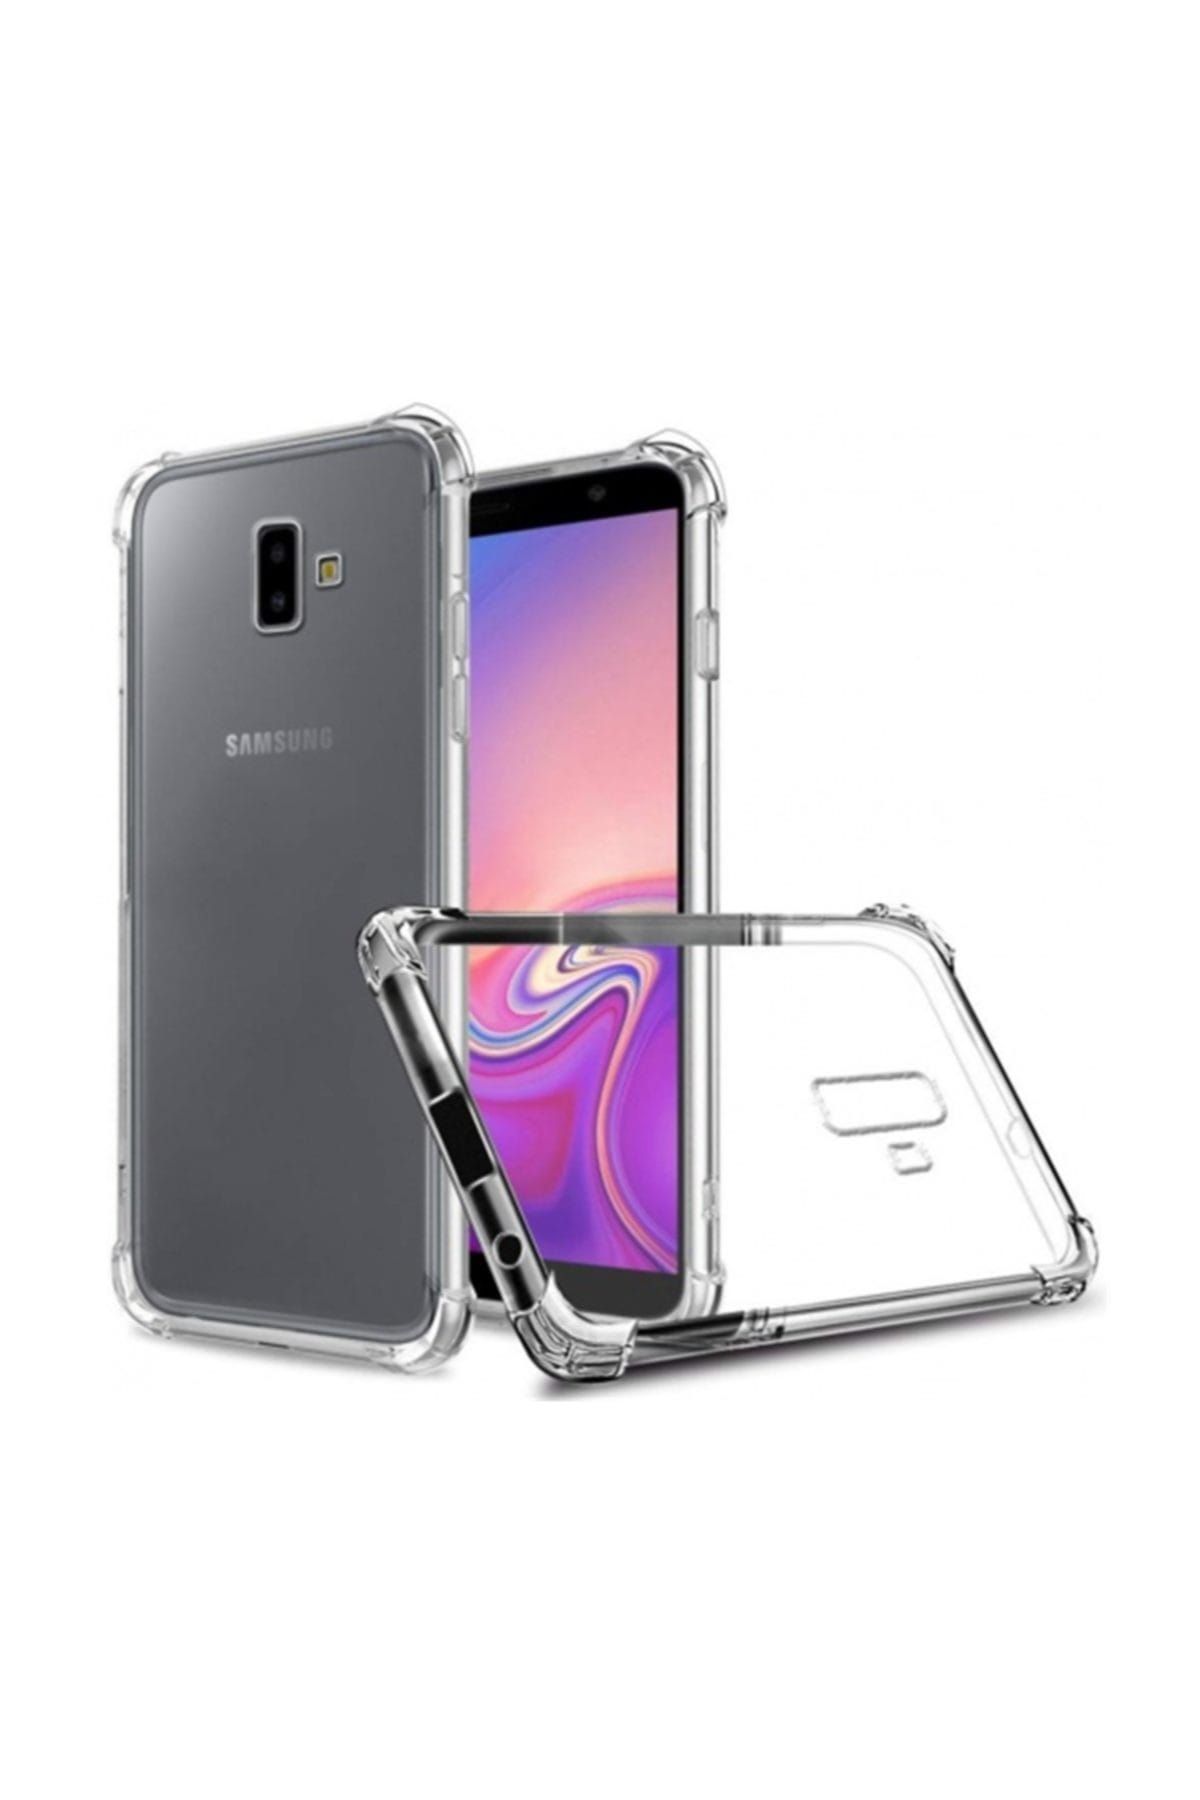 Telefon Aksesuarları Zengin Çarşım Samsung Galaxy J6 Plus Ultra İnce Şeffaf Airbag Anti Şok Silikon Kılıf - Şeffaf